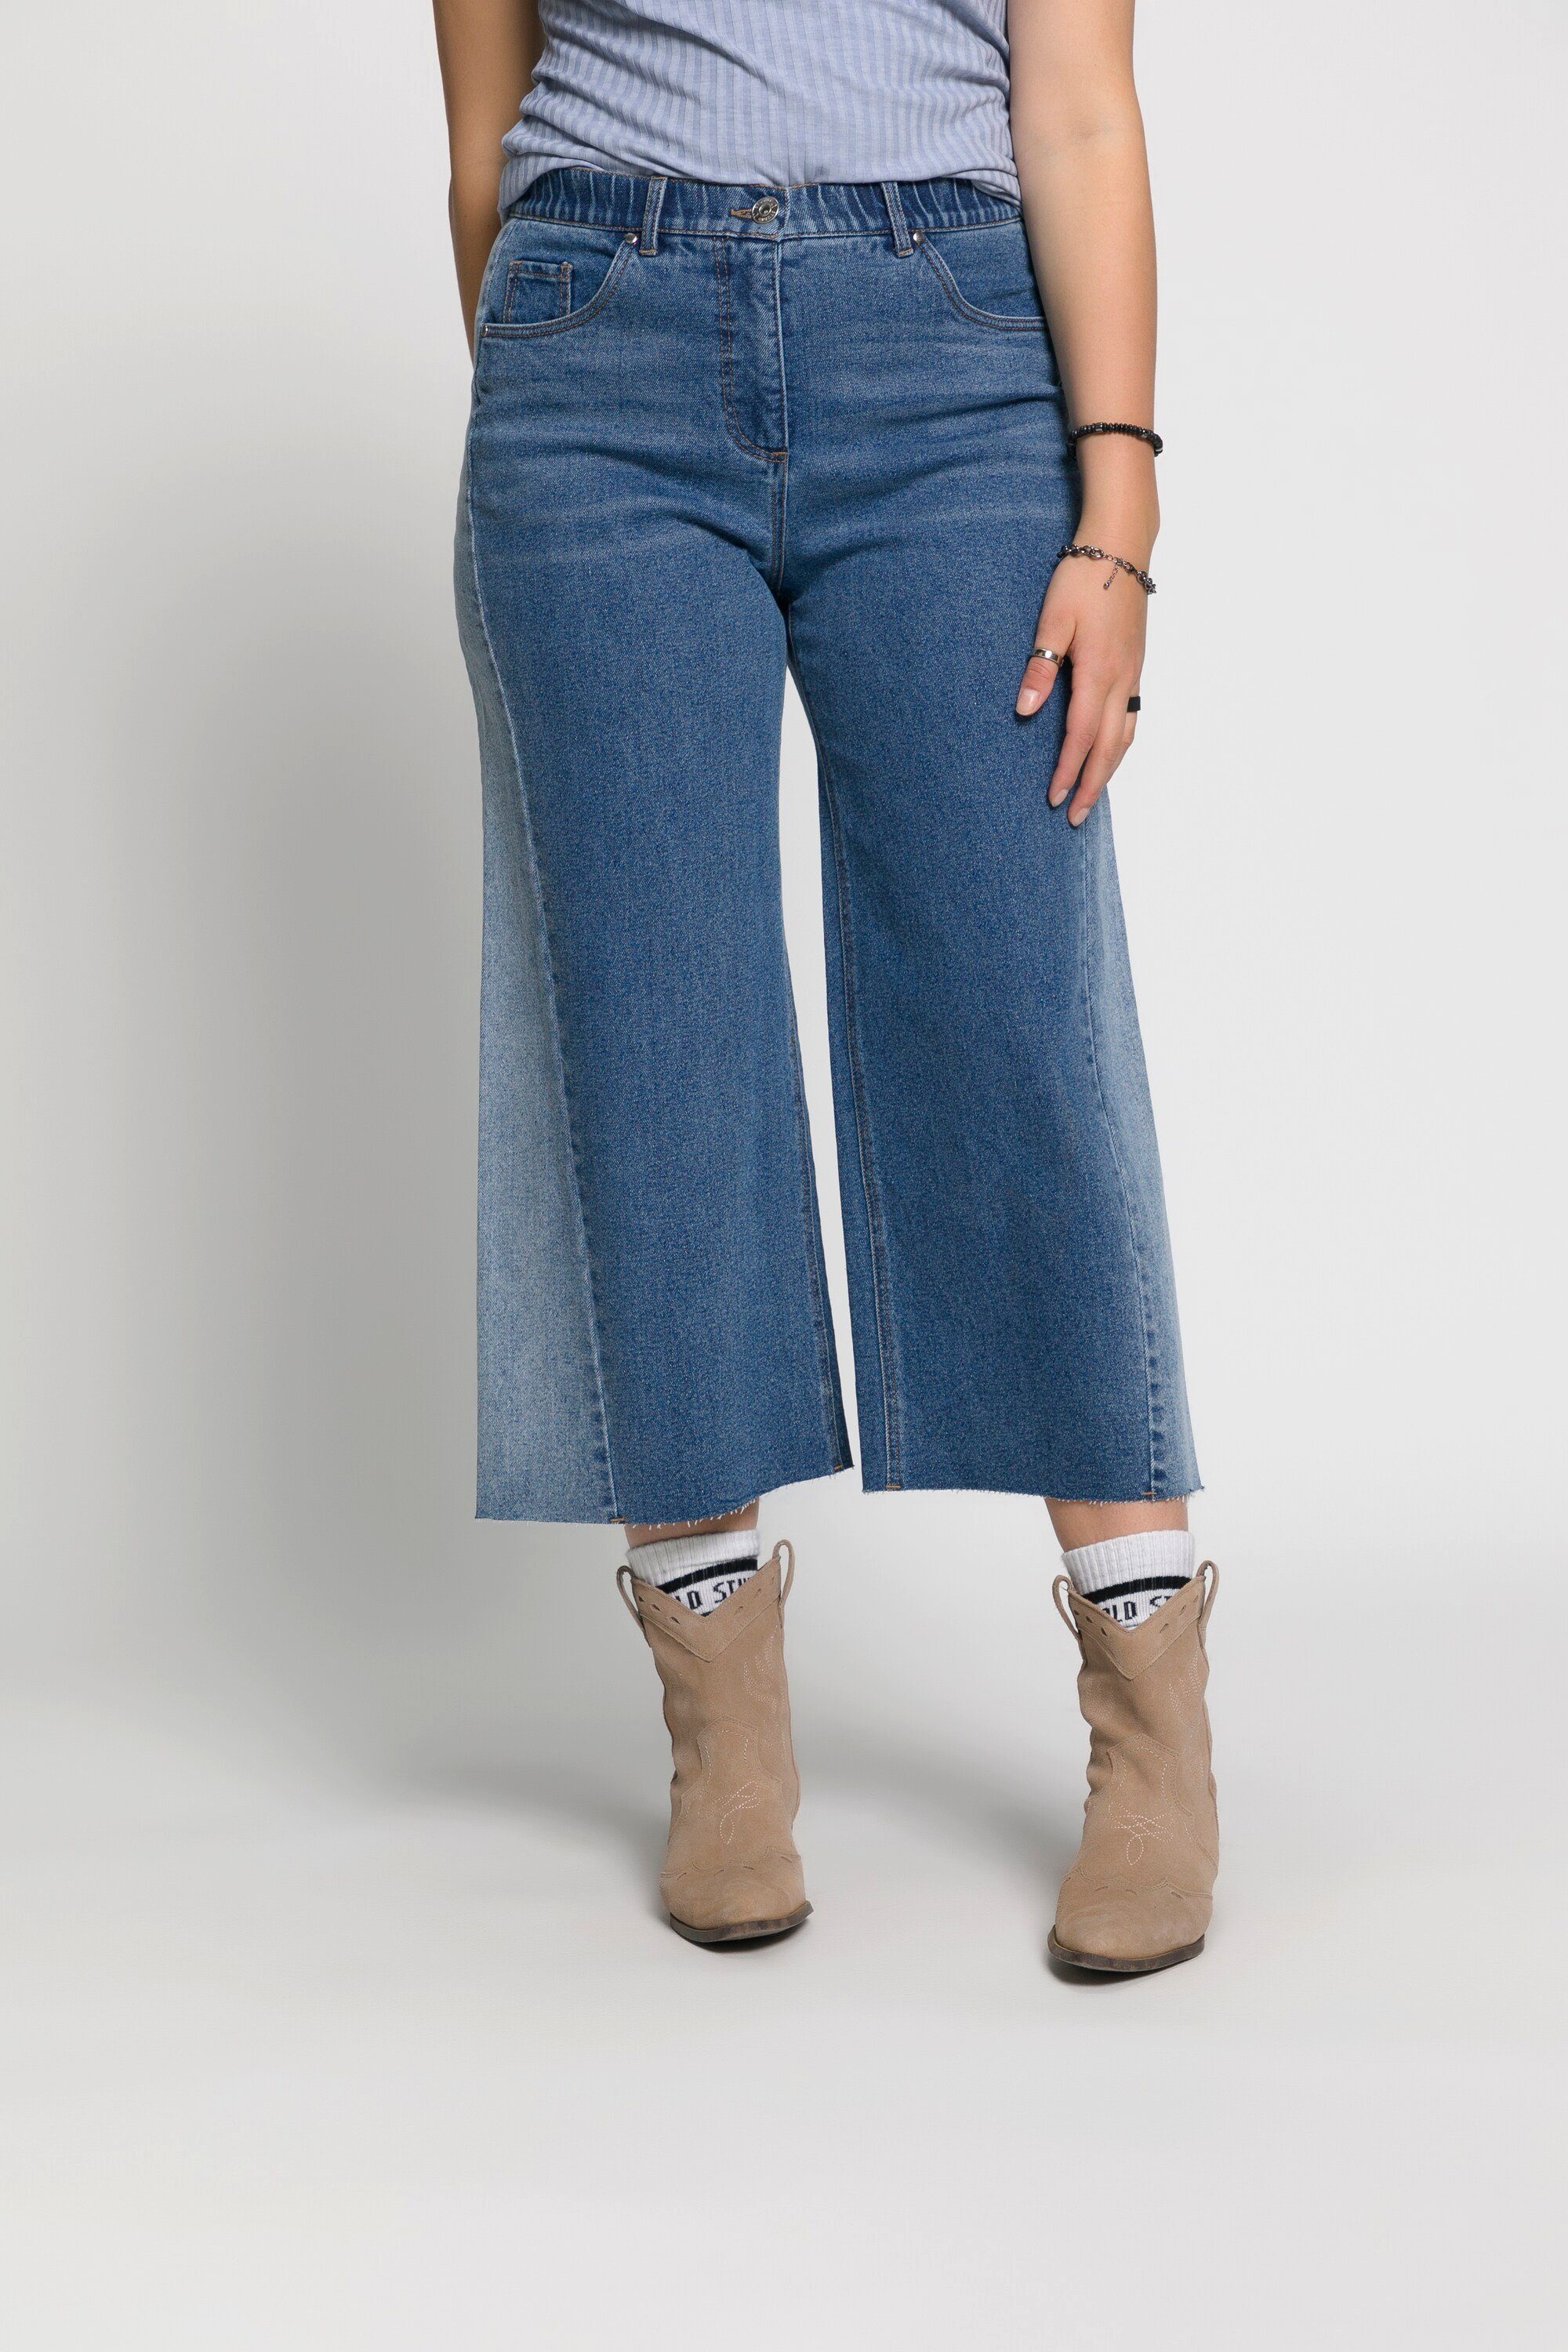 Culotte Culotte Studio Patch Fransensaum 5-Pocket Untold Look Jeans